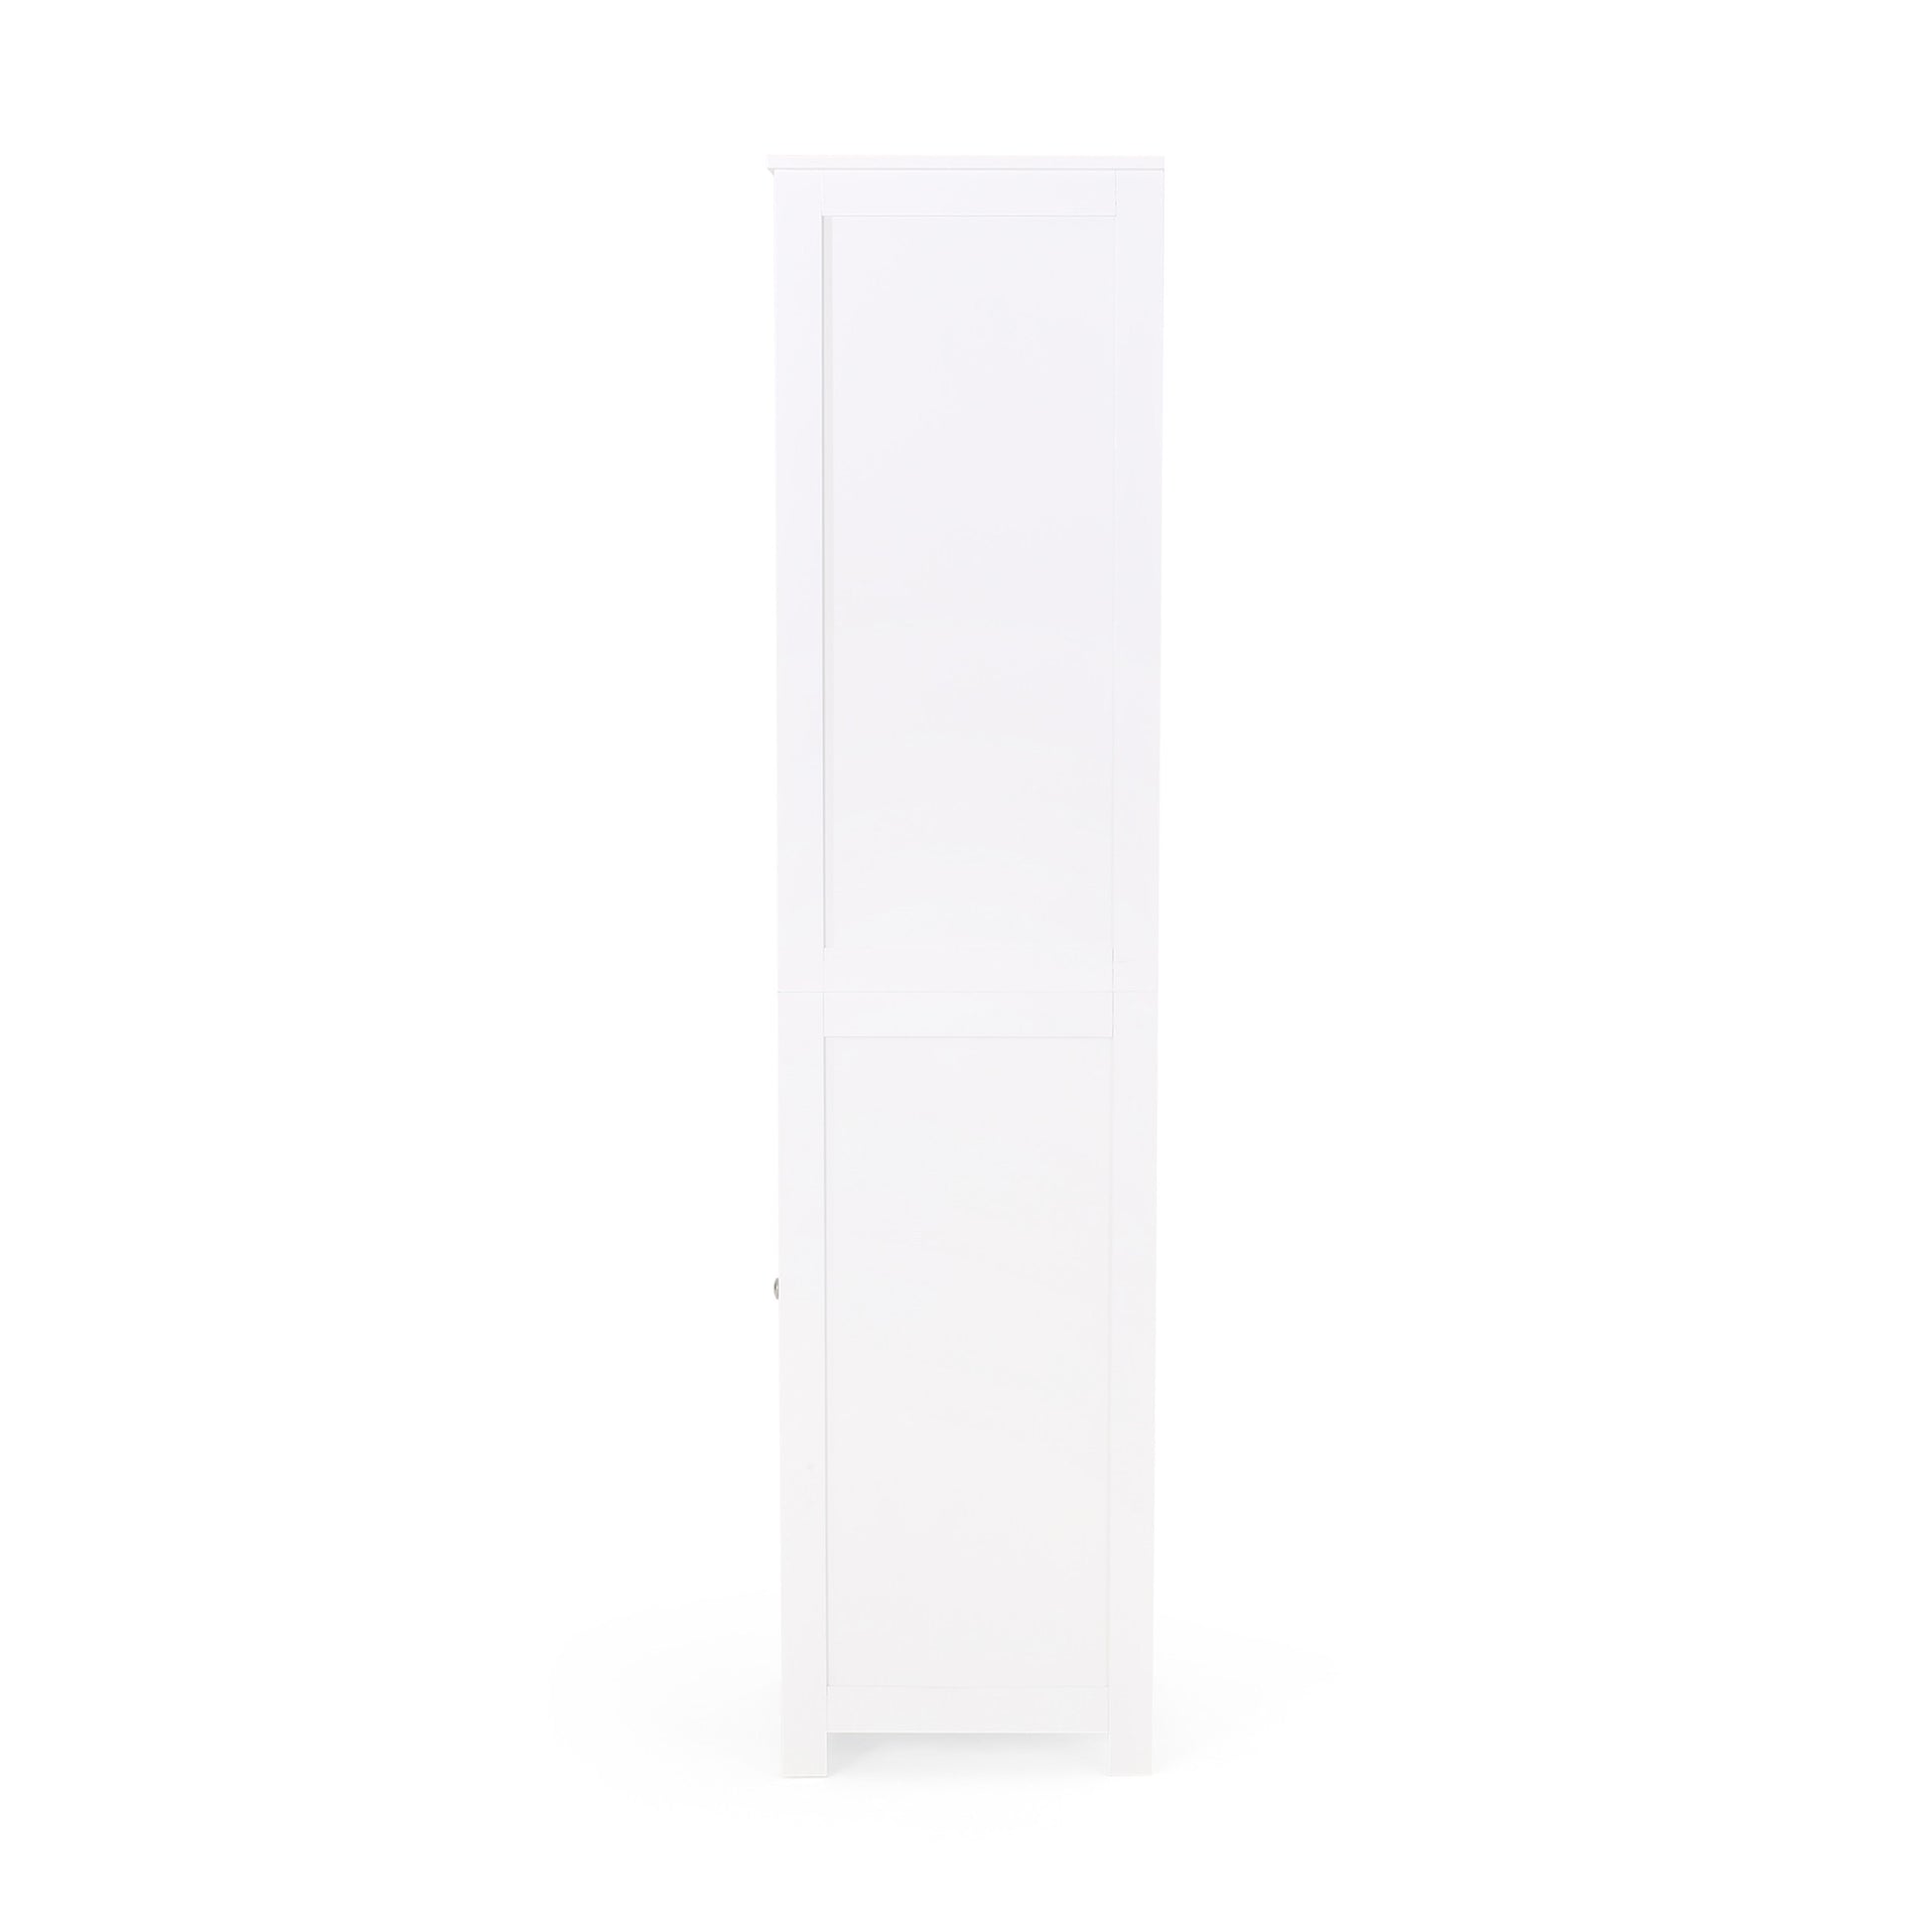 Bathroom Cabinet - White Mdf